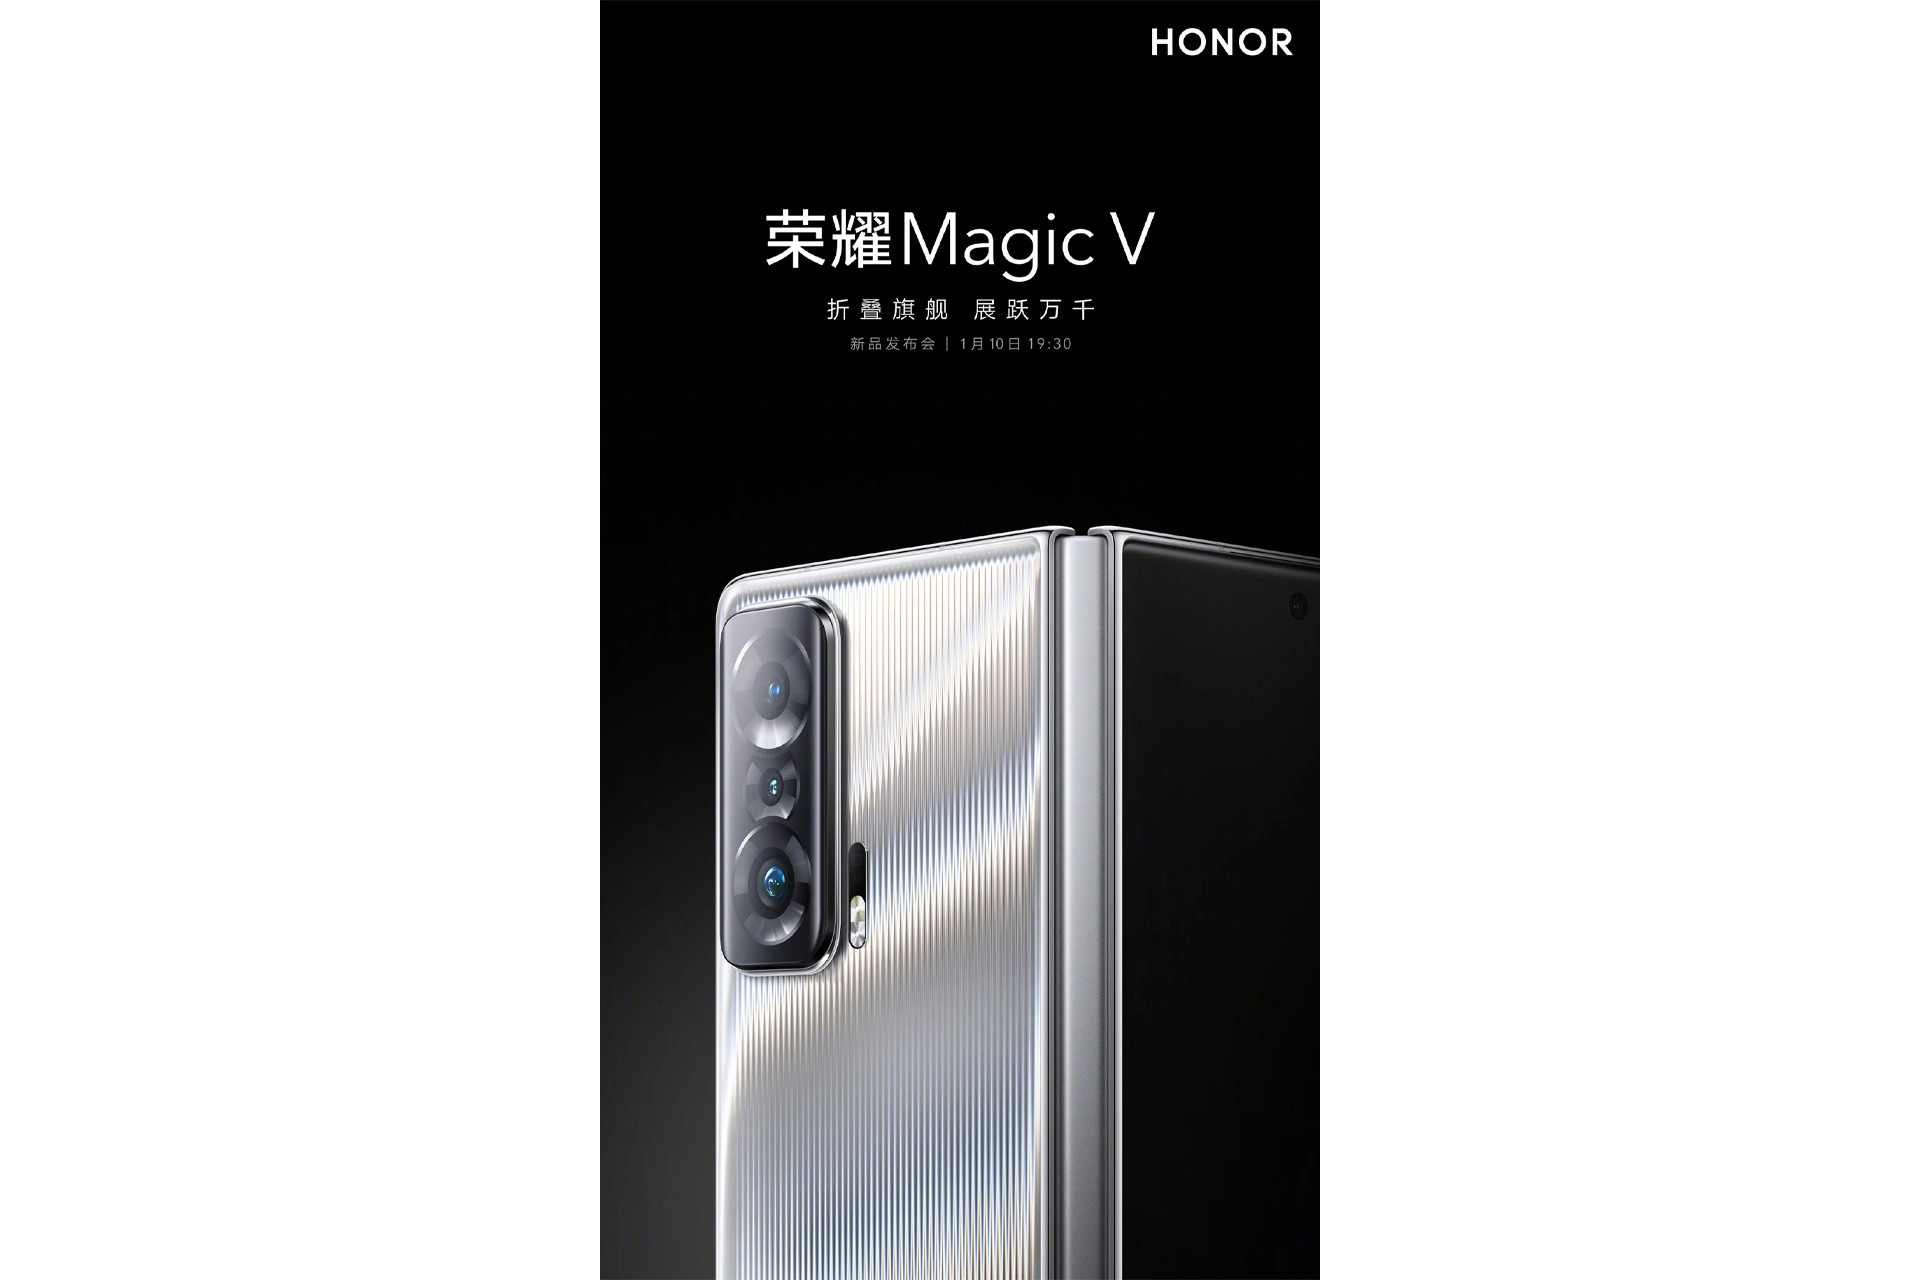 Official Honor Magic V poster